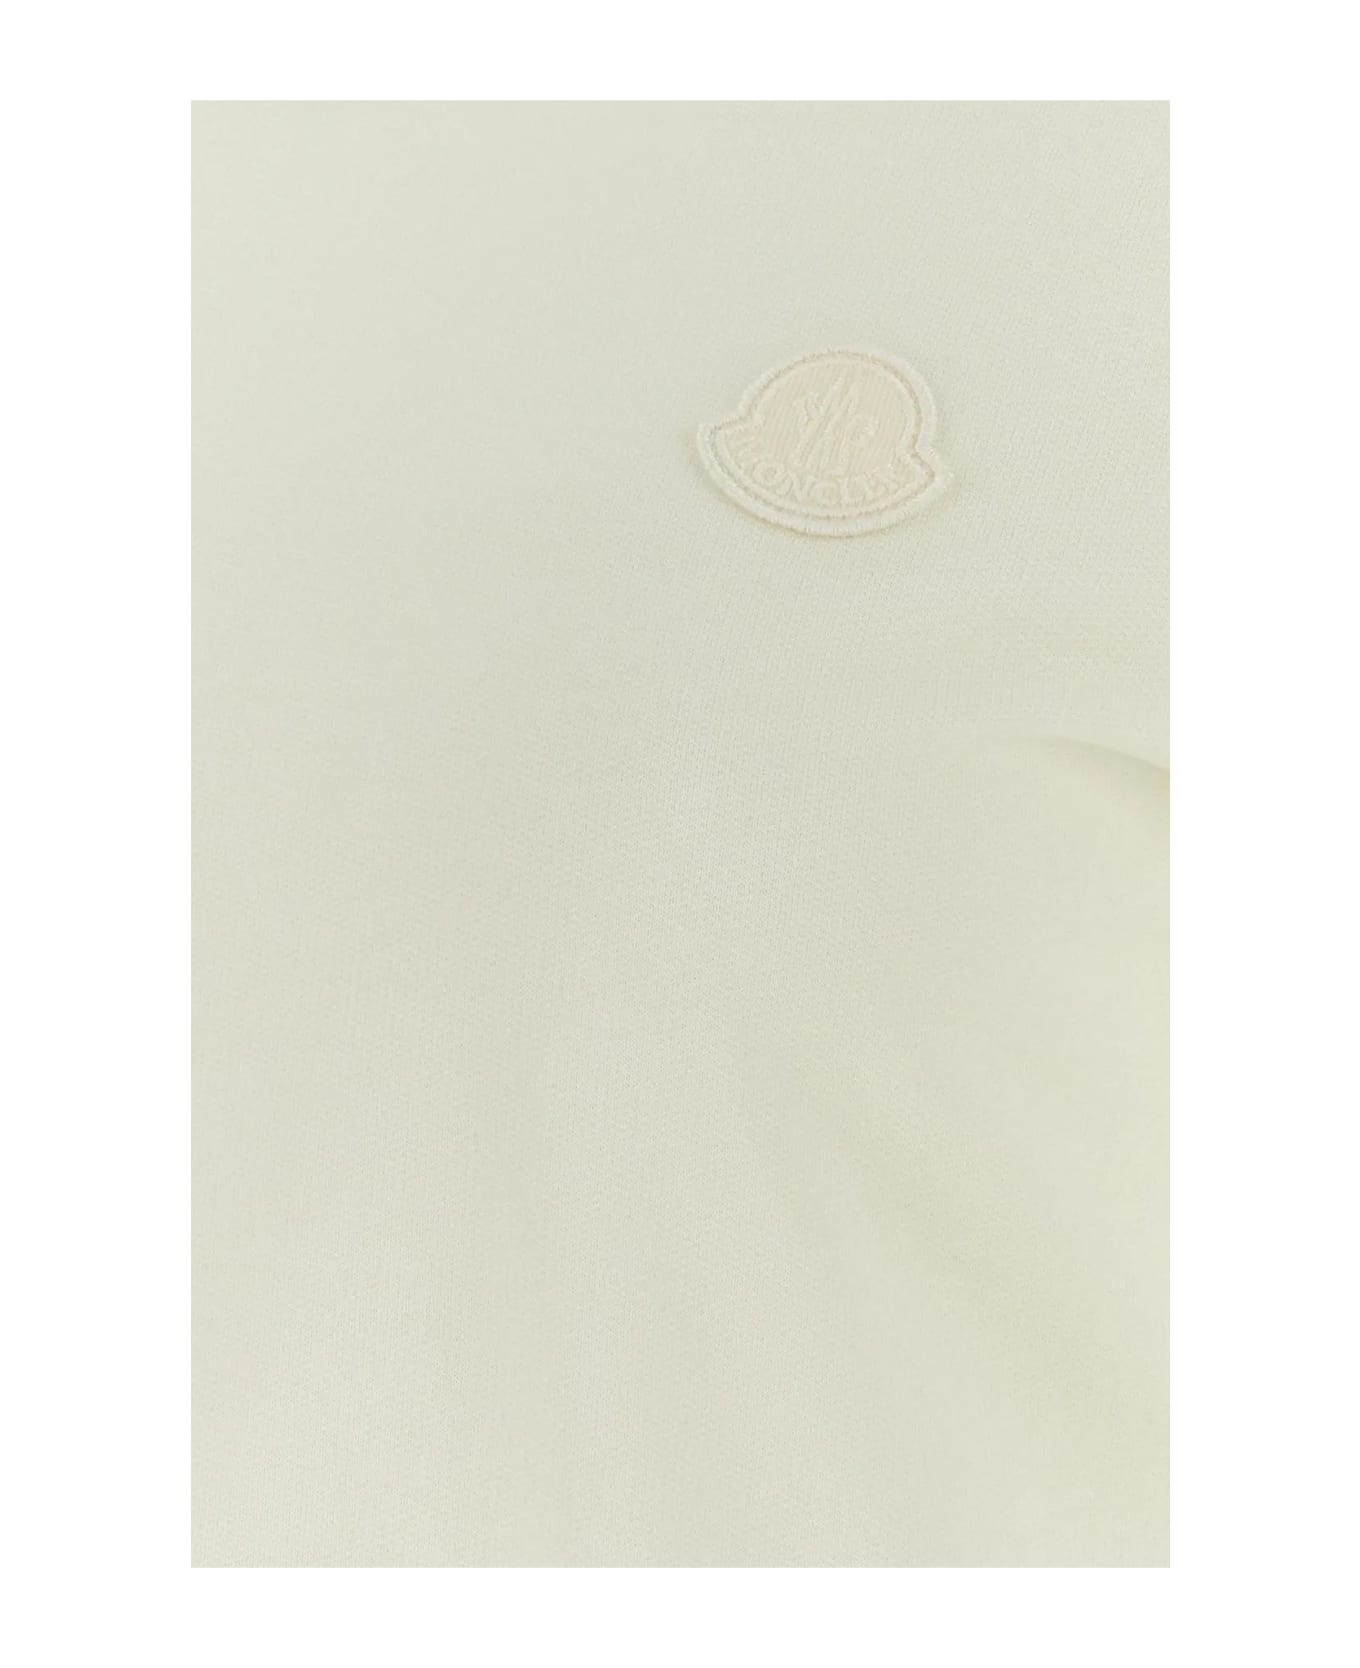 Moncler Ivory Cotton Mni Dress - White ワンピース＆ドレス